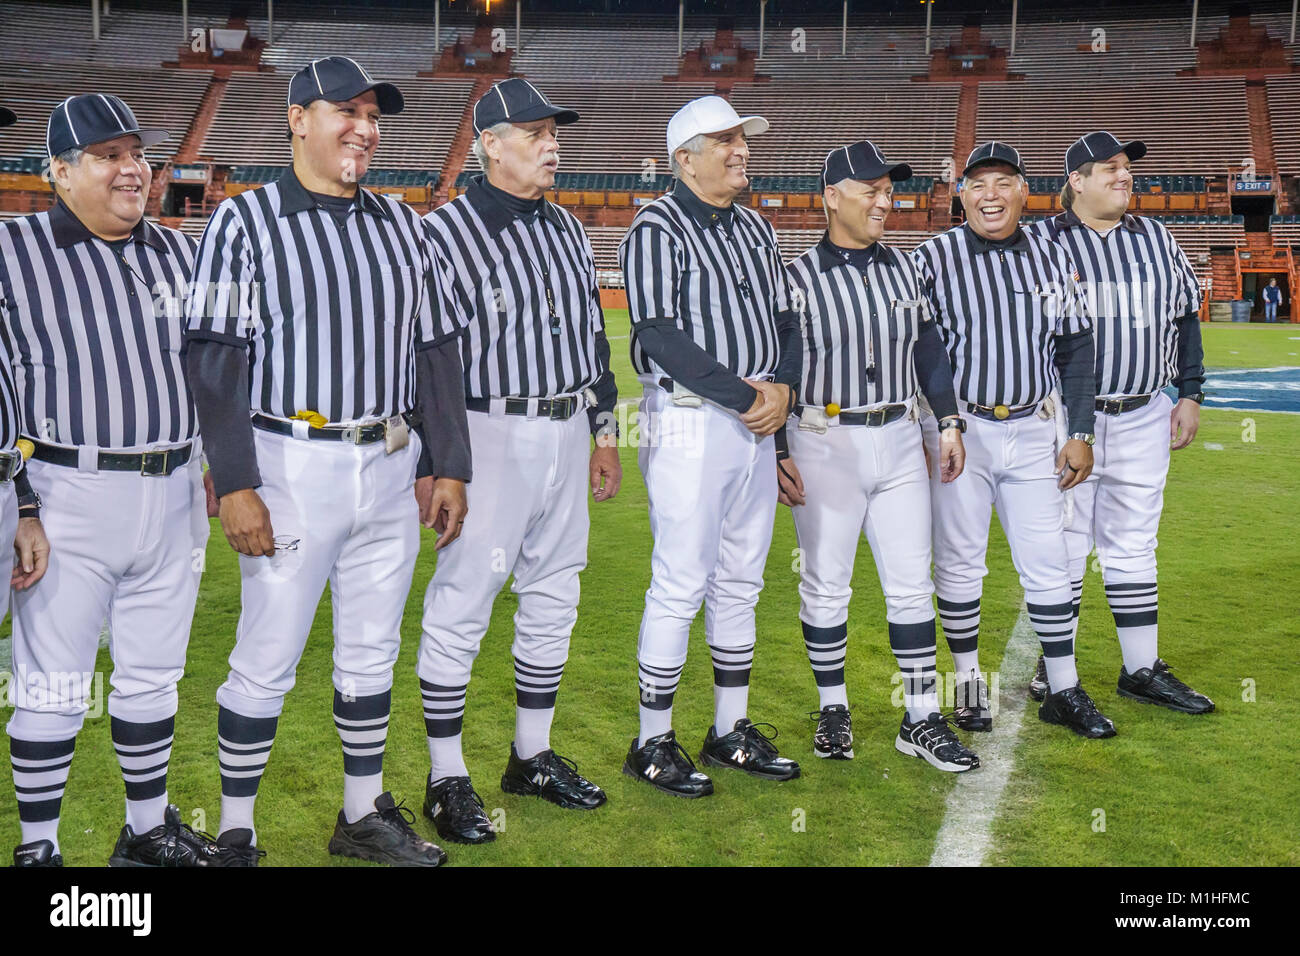 Miami Florida,Orange Bowl,All American Offense Defense Bowl,high school football referees,officials,striped uniforms,man men male,FL080109021 Stock Photo